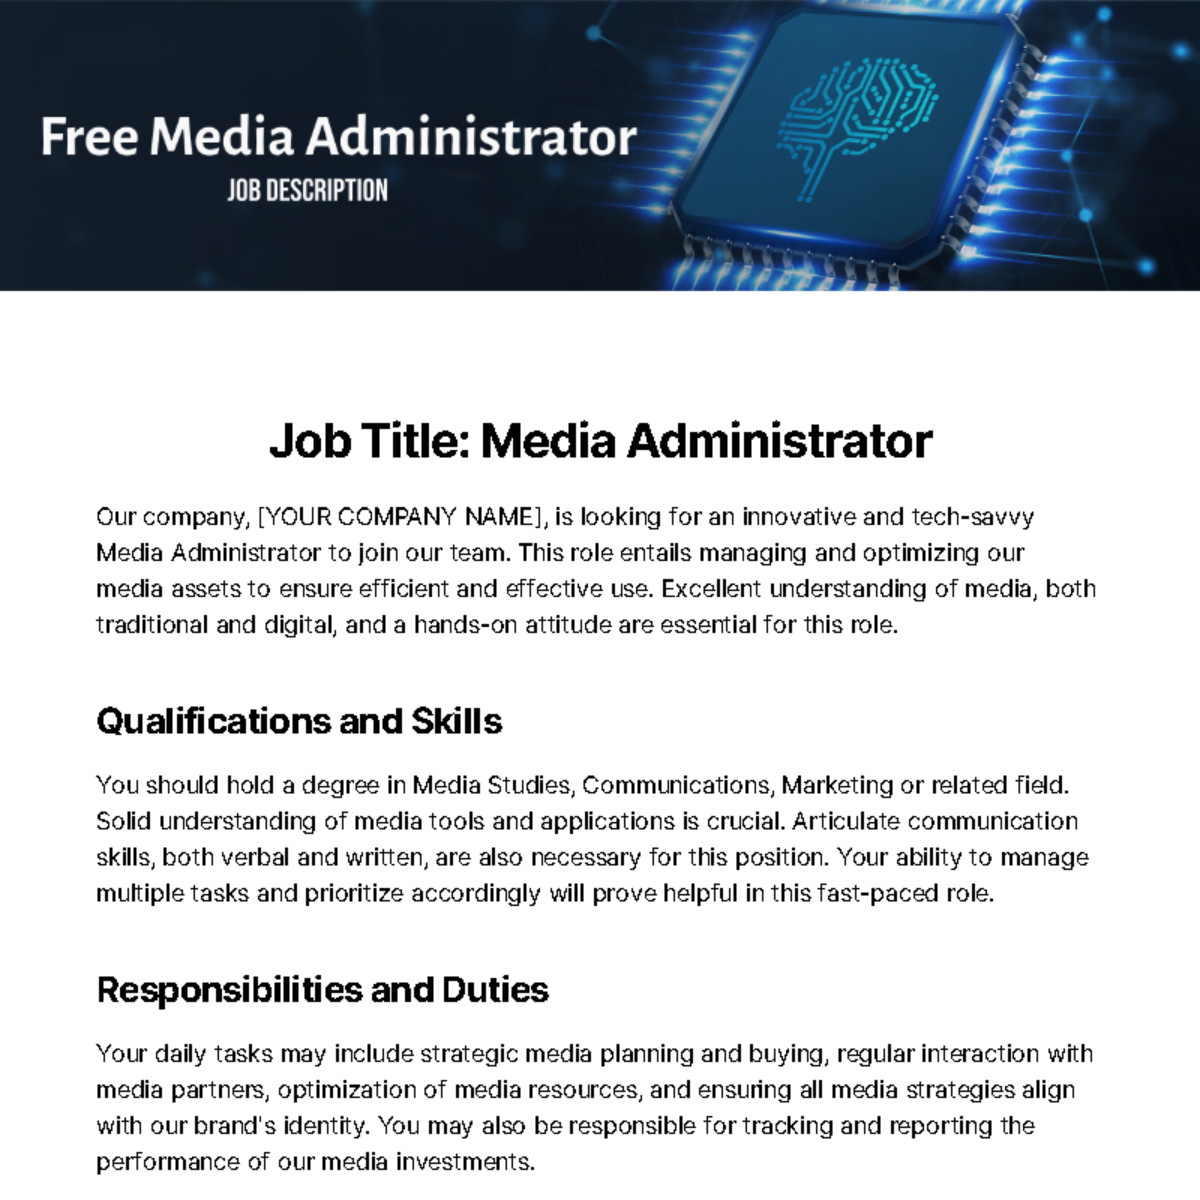 Free Media Administrator Job Description Template